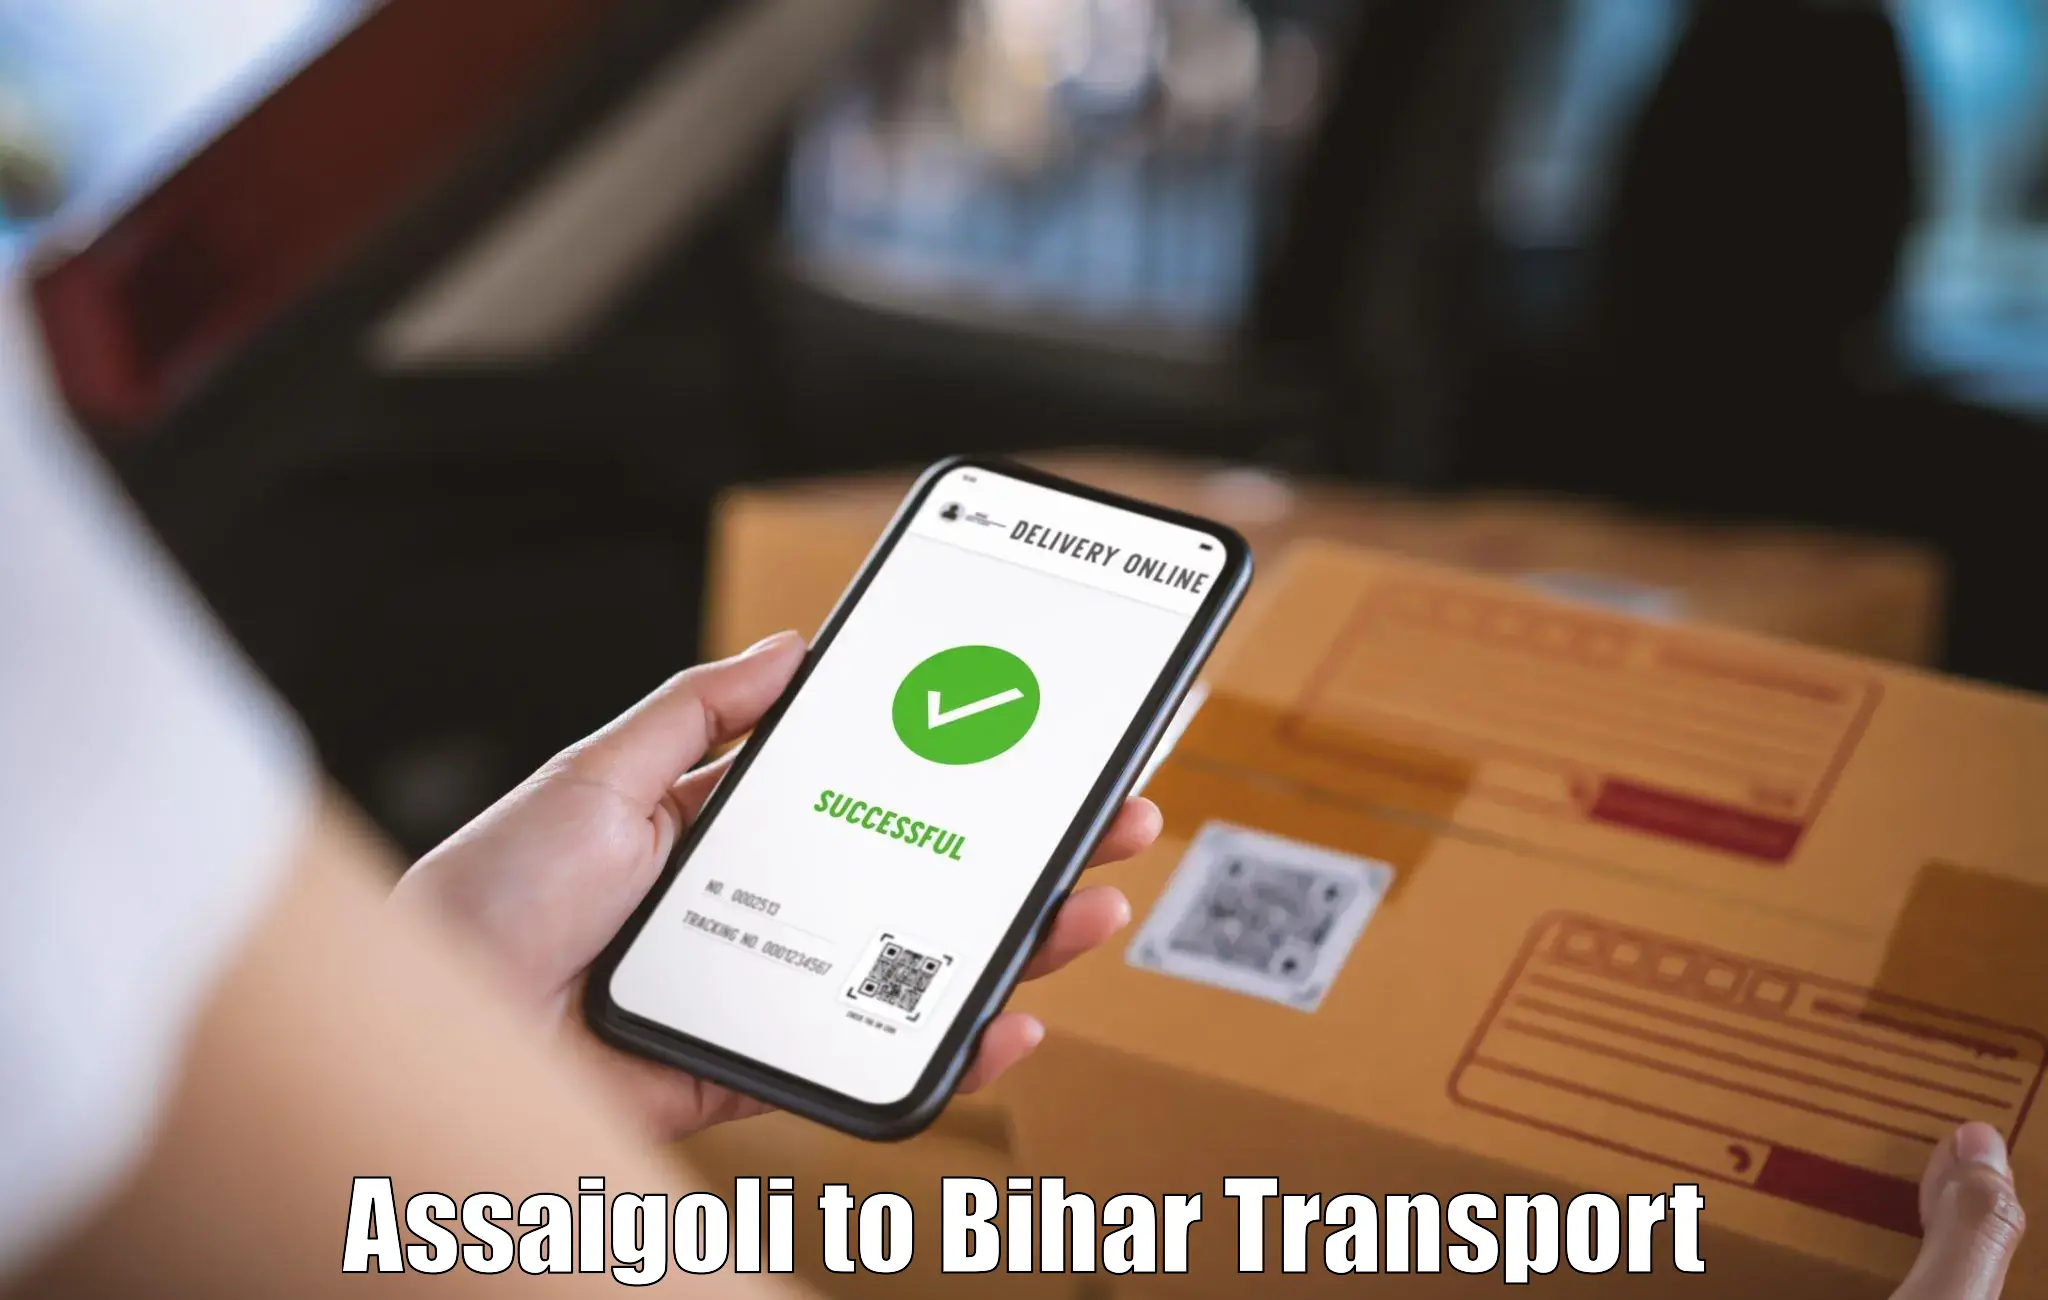 Transport in sharing in Assaigoli to Maheshkhunt